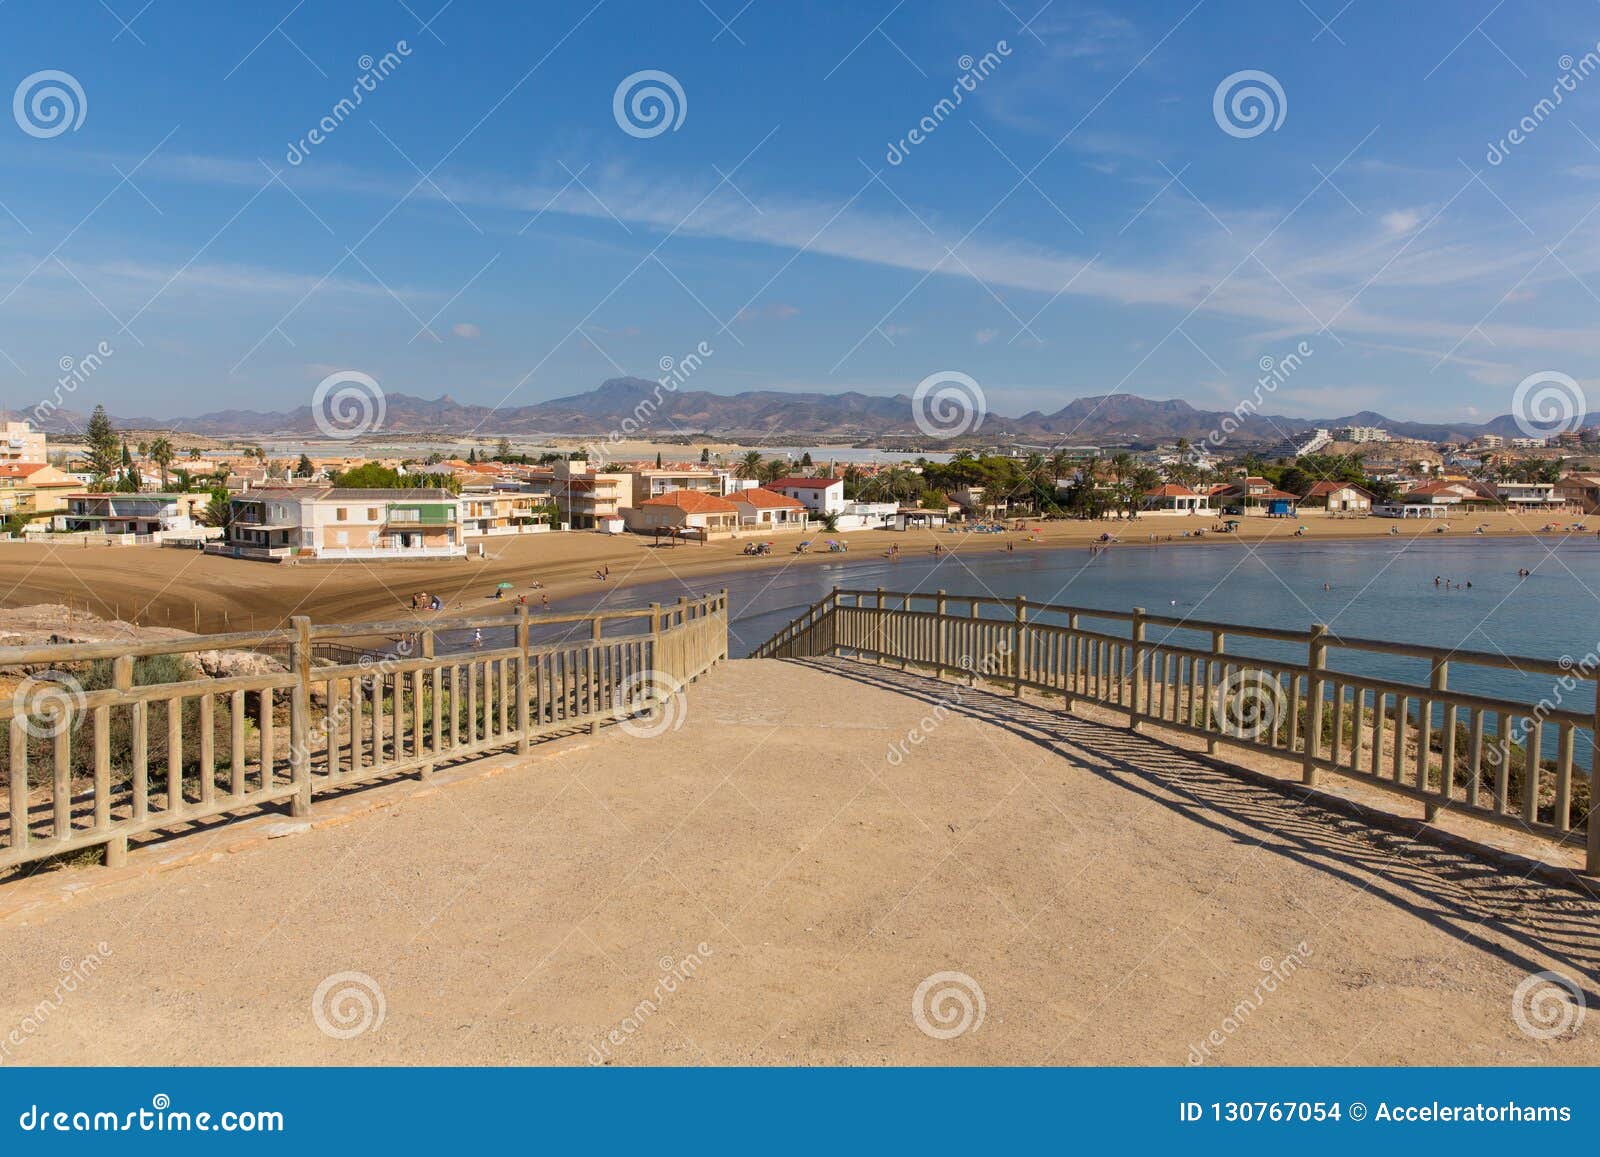 view from mirador cabezo de gavilan puerto de mazarron coast spain